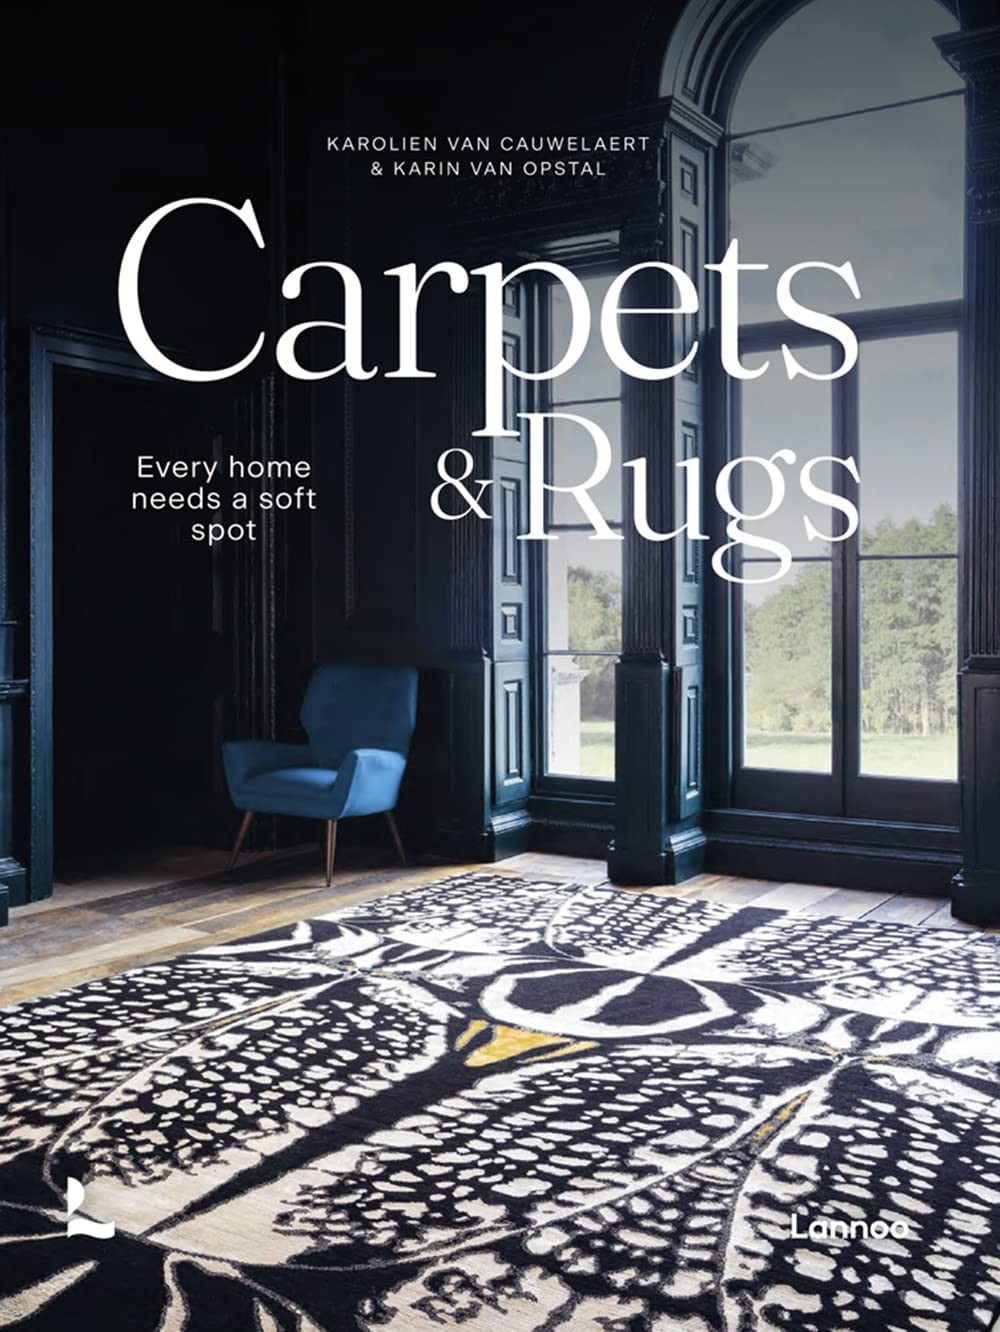 Bogaerts Carpets & Rugs: Every home needs a soft spot 